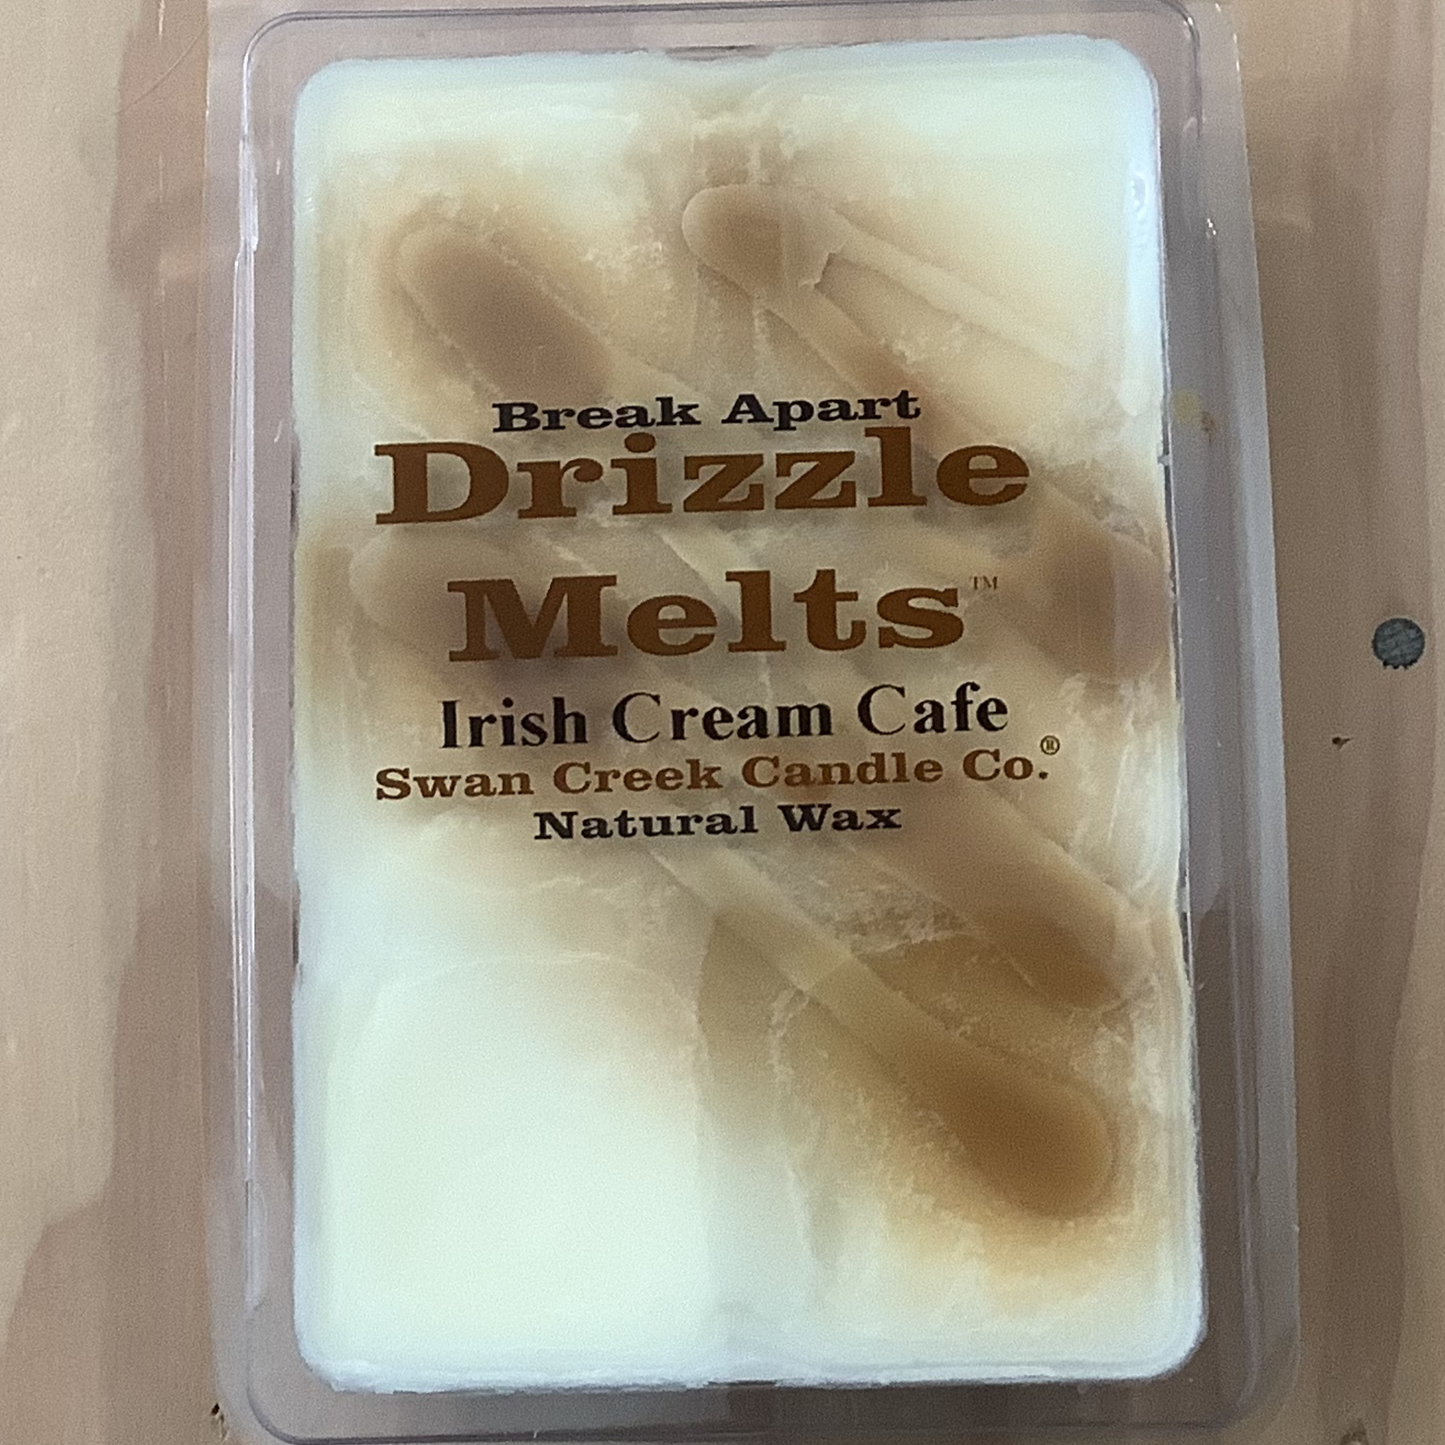 Irish Cream Cafe Drizzle Melts